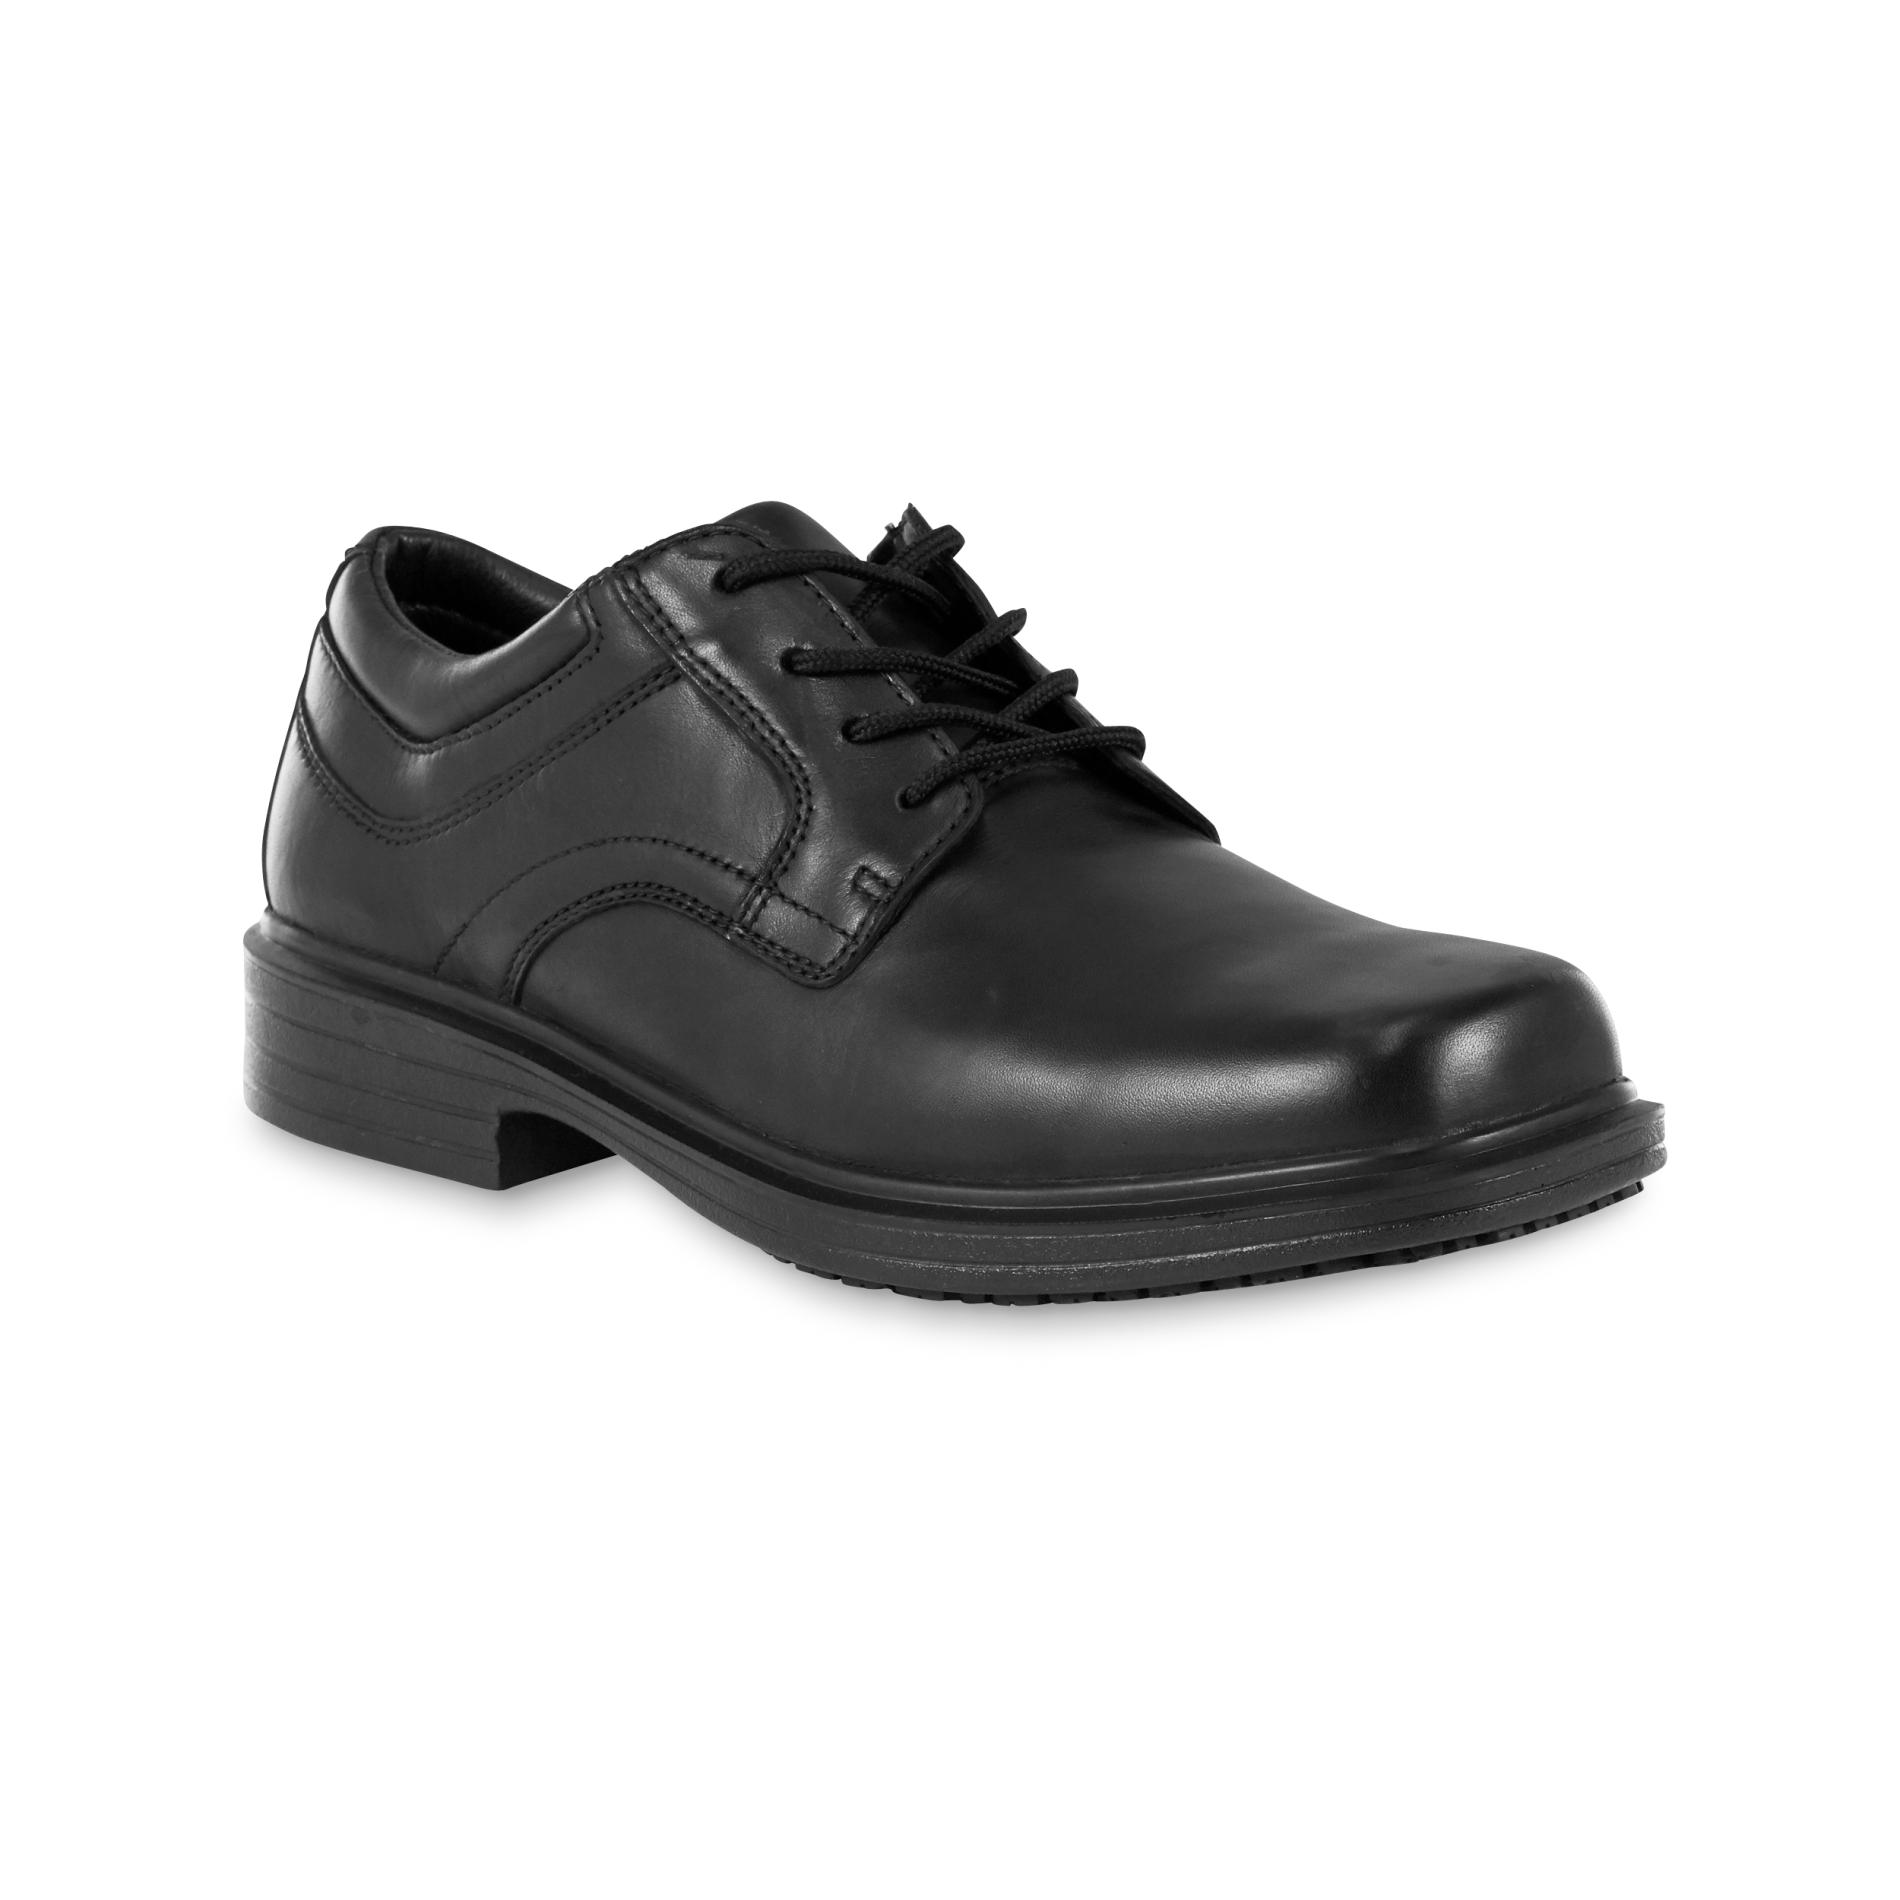 mens black slip on work shoes